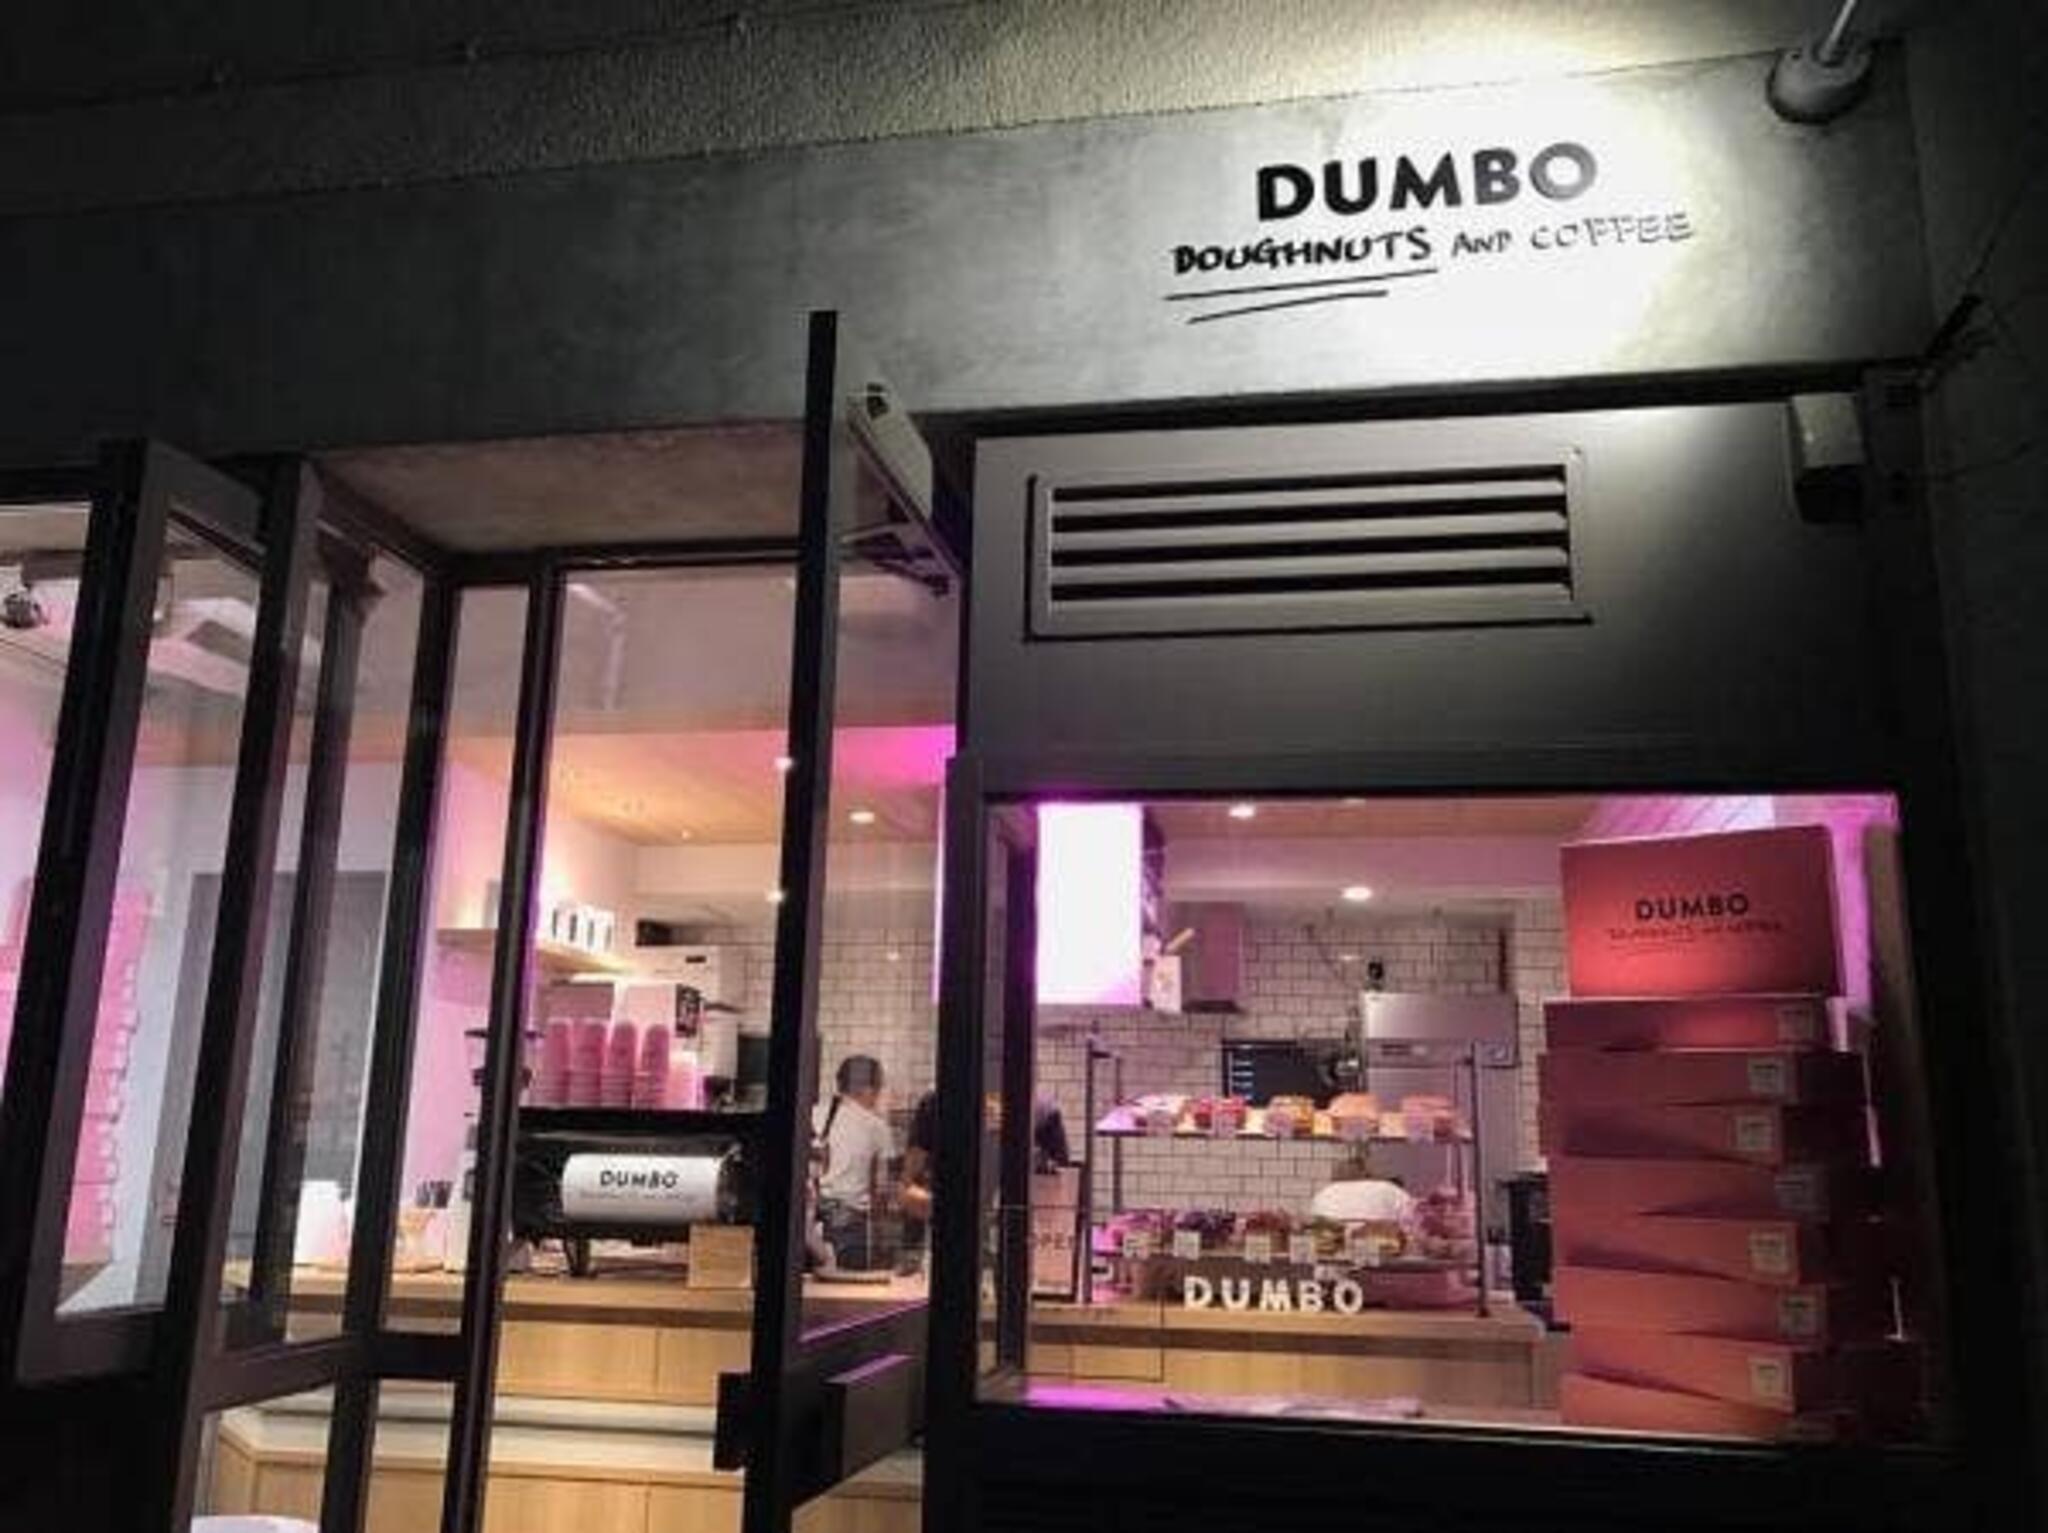 DUMBO Doughnuts and Coffeeの代表写真5